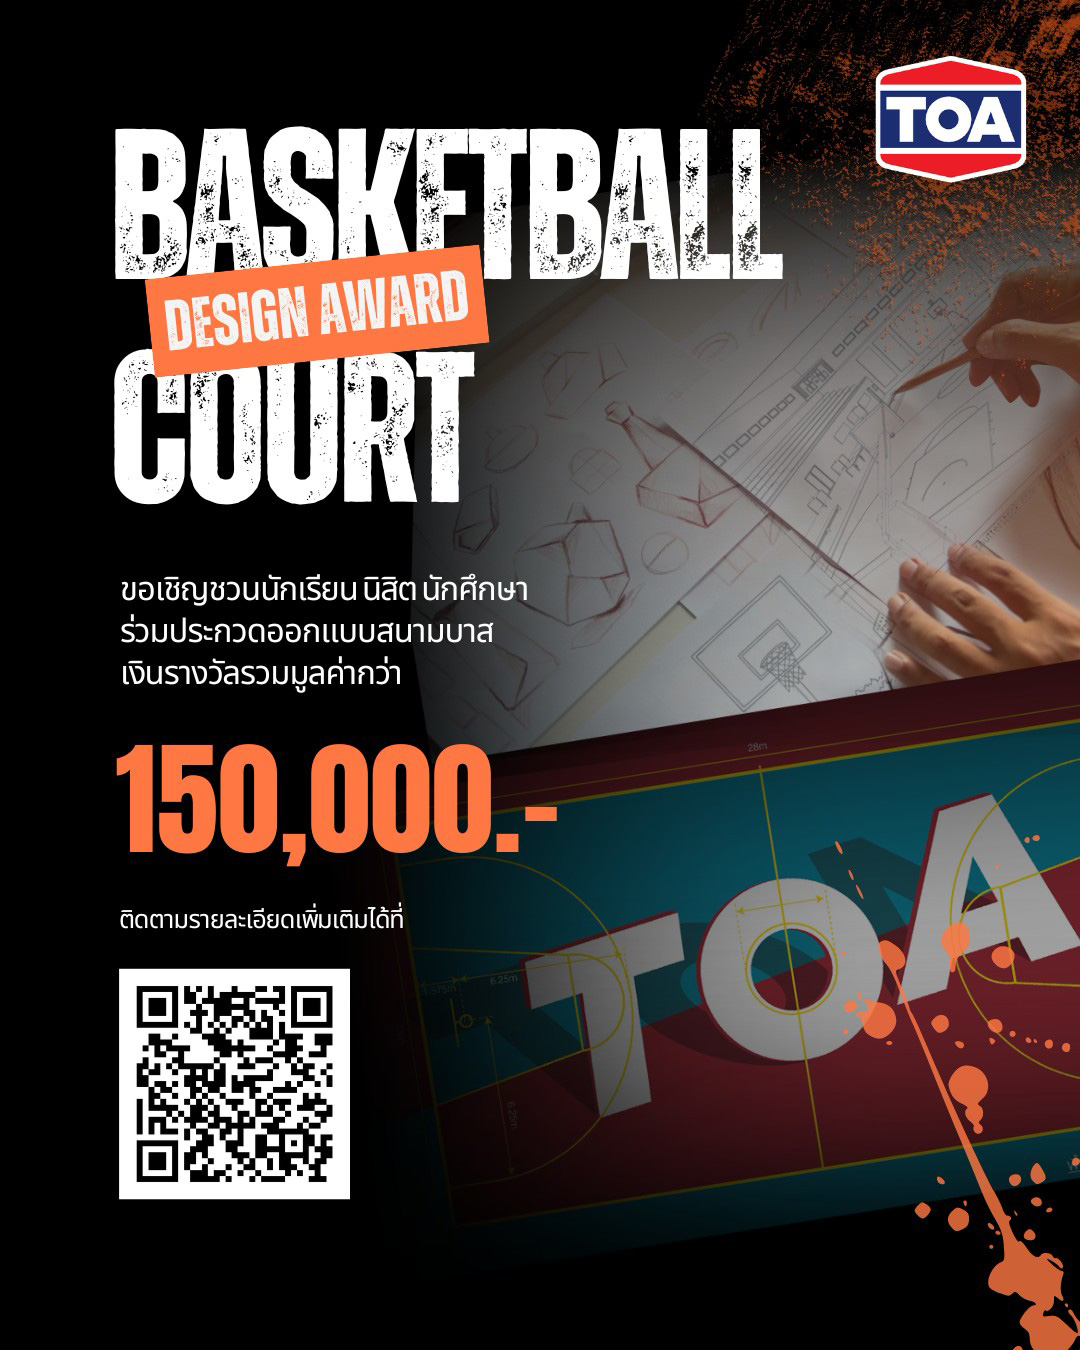 Basketball Court Design Award by TOA Paint : ทาสี ตีเส้นสนามบาส All Thailand